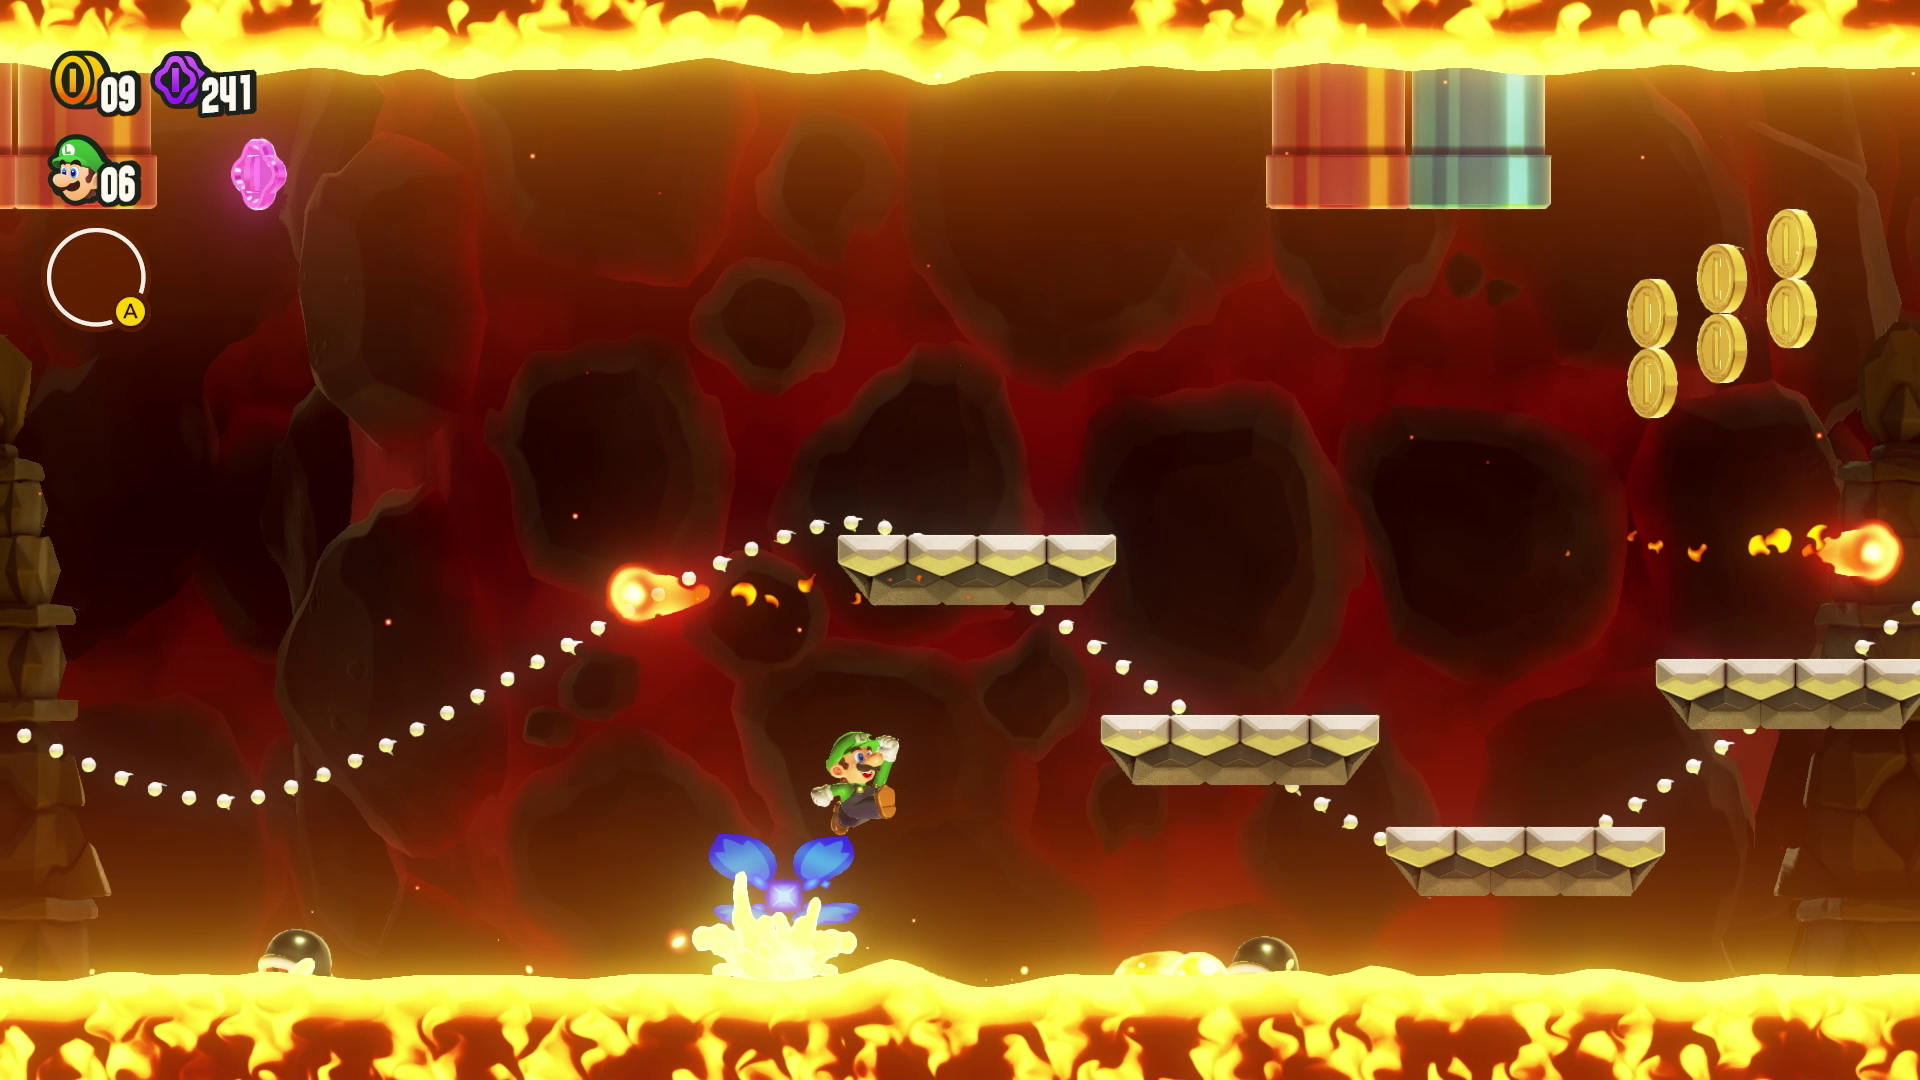 Screenshots from Super Mario Bros. Wonder, provided by Nintendo